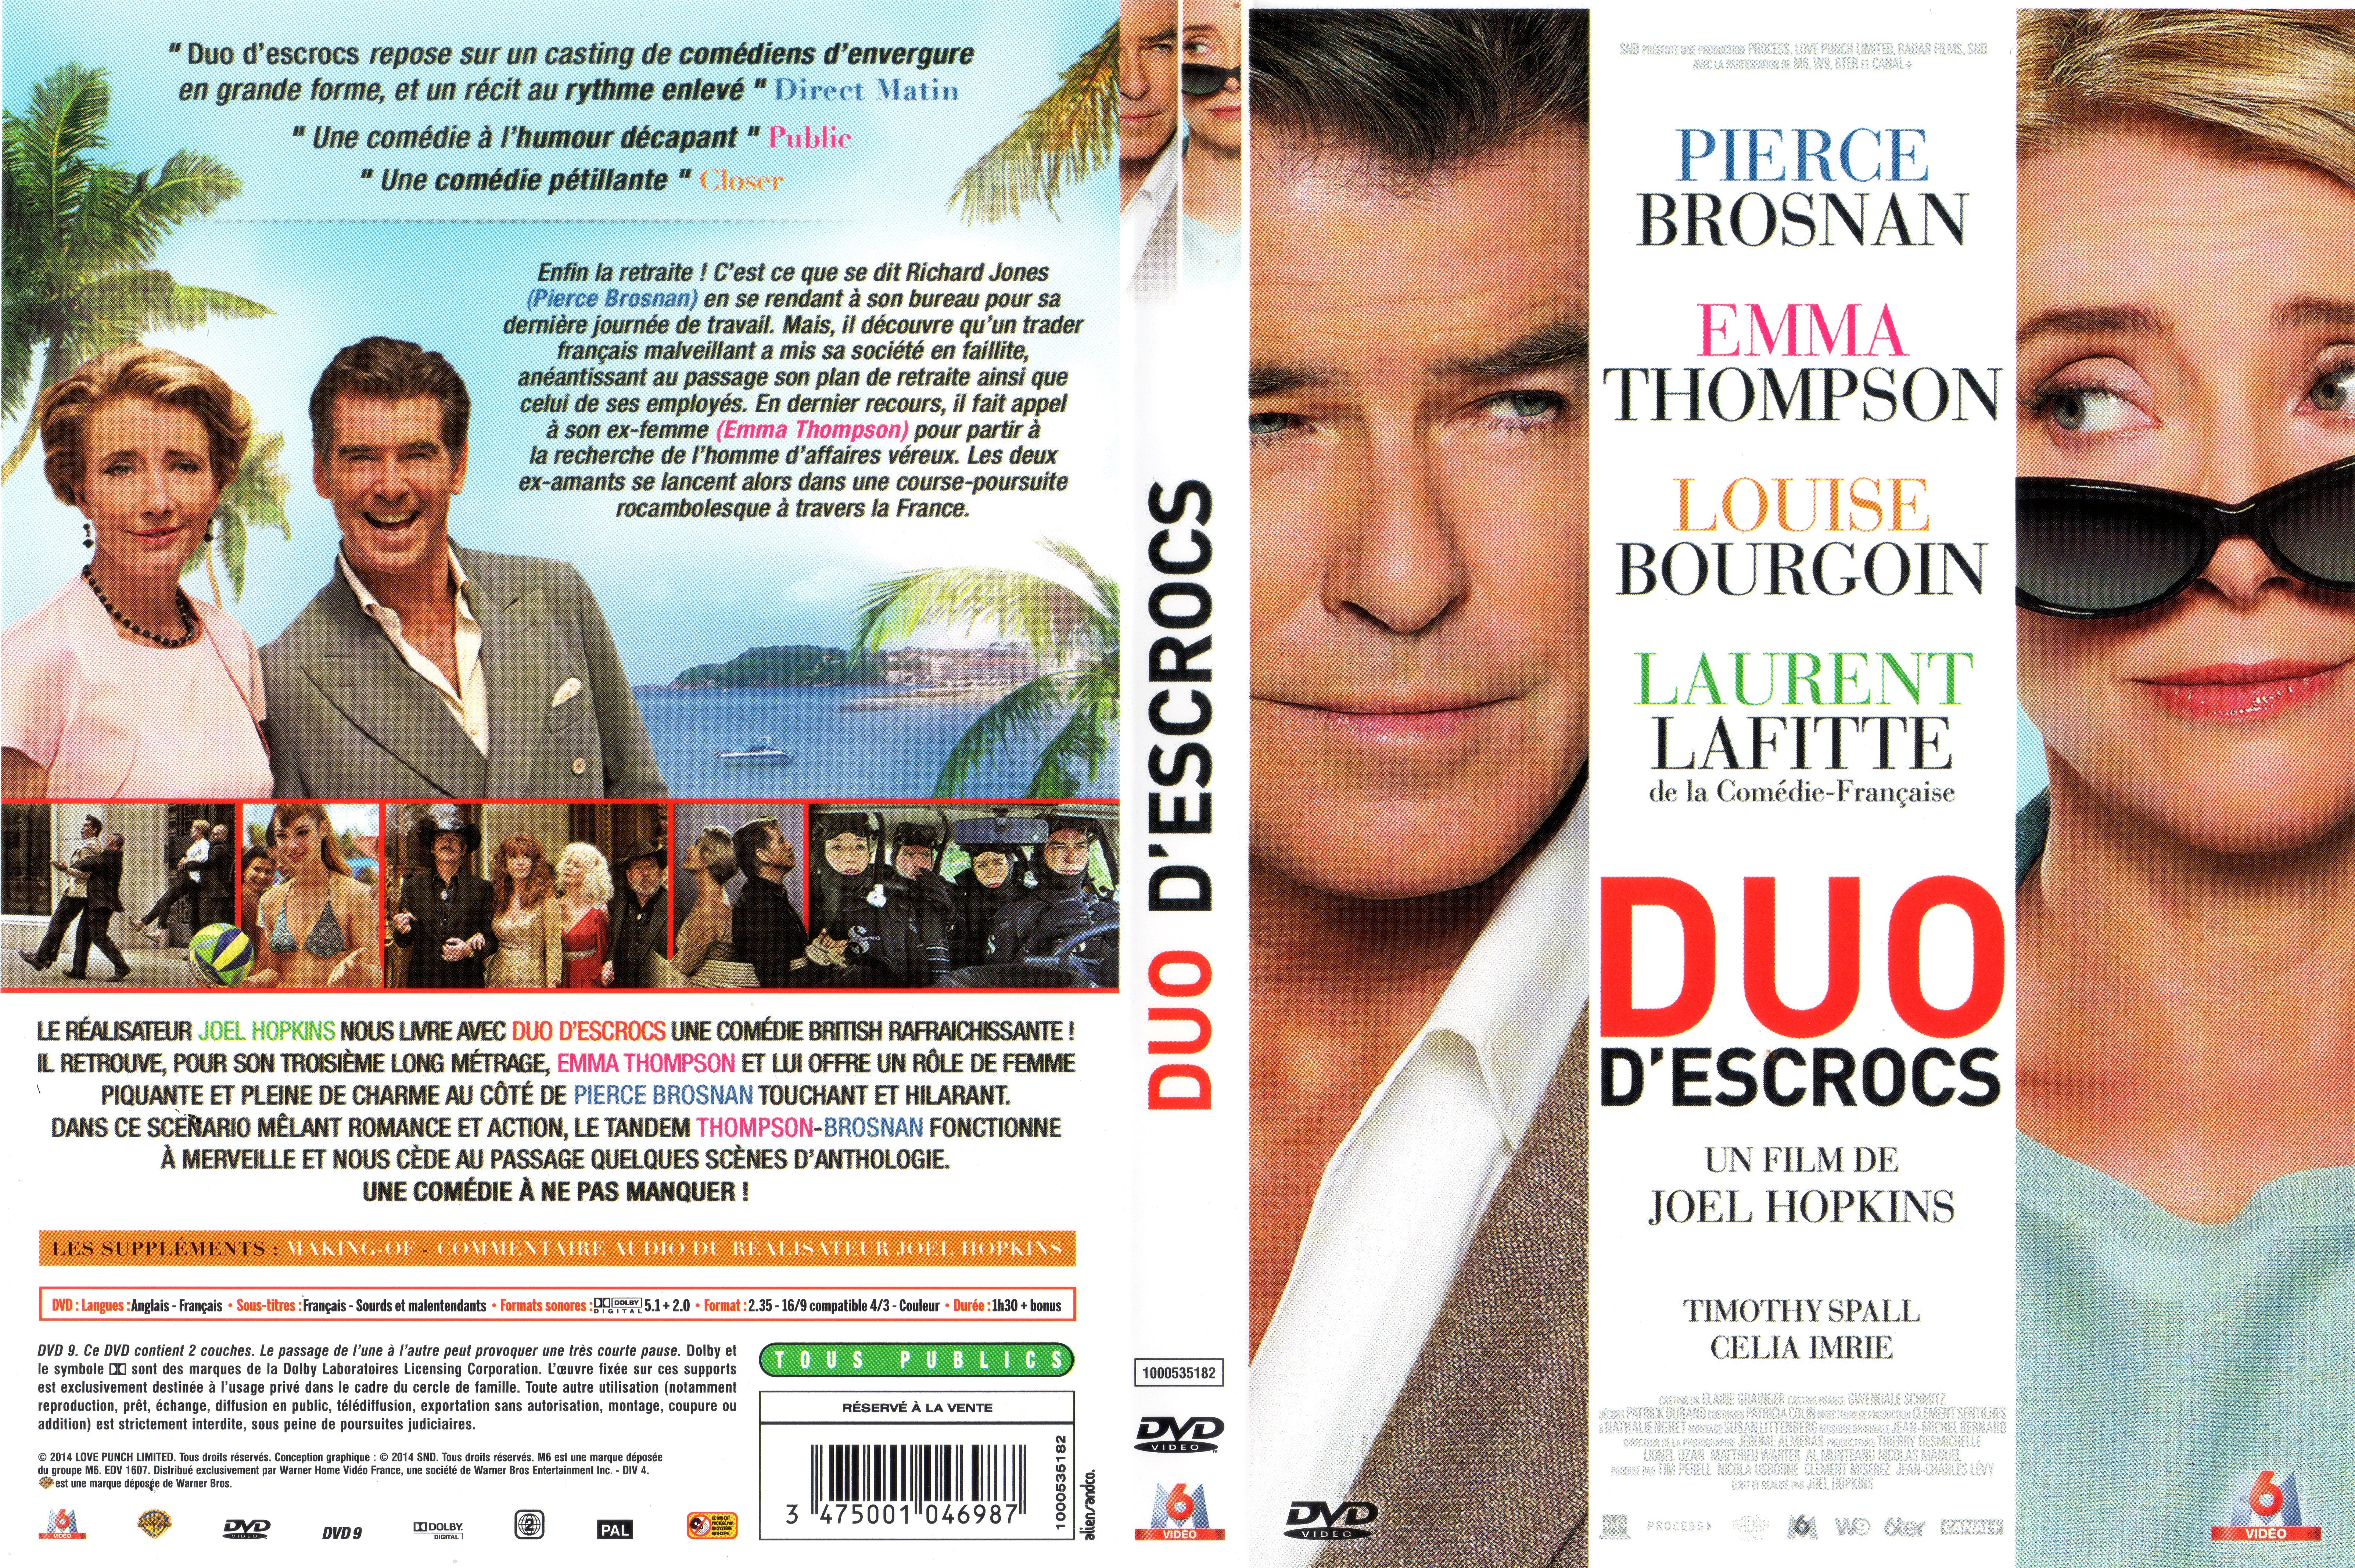 Jaquette DVD Duo d